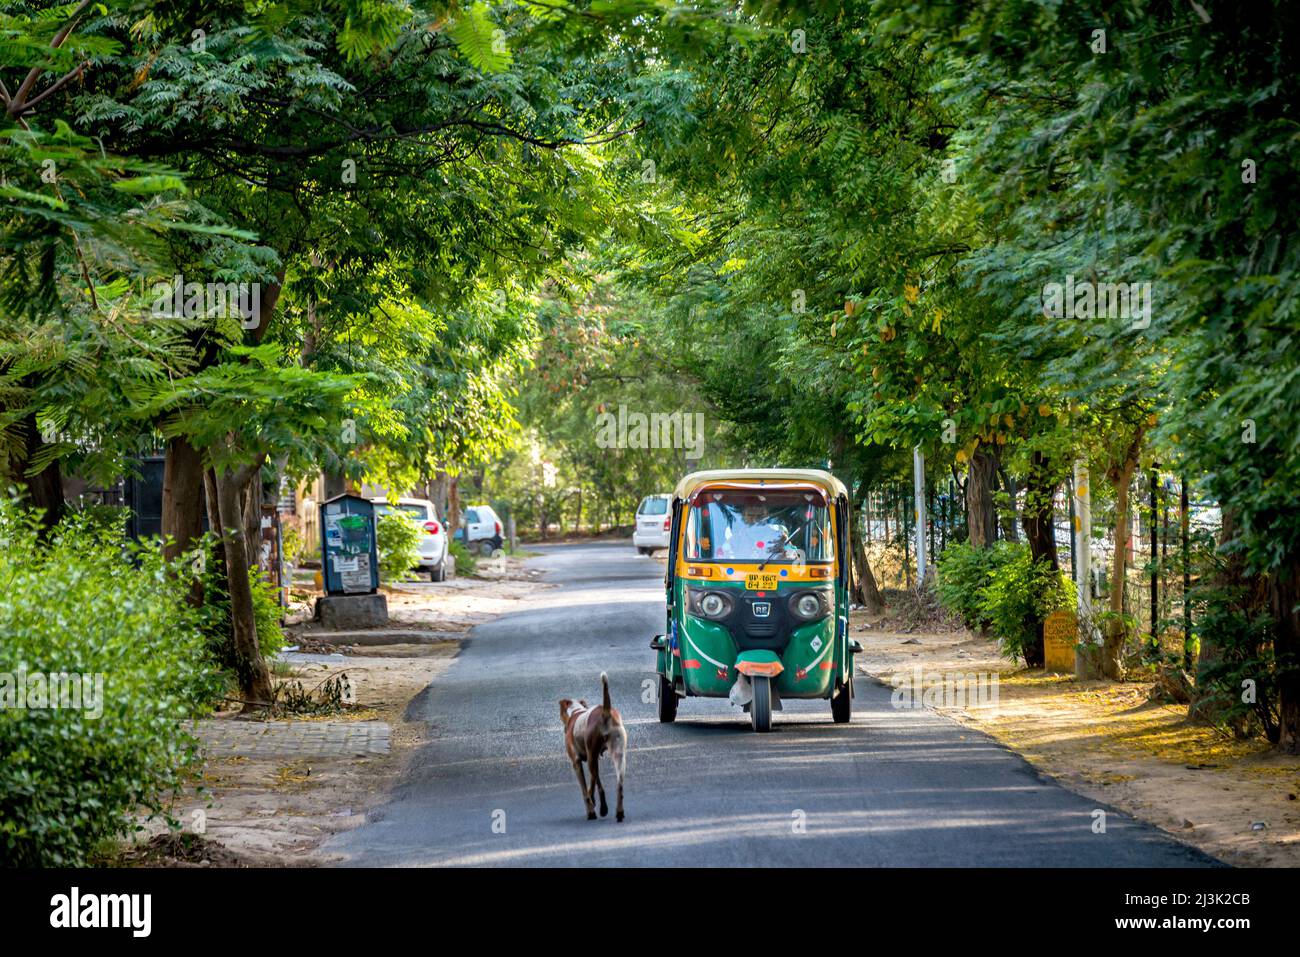 Auto rickshaw and dog on a street in India; Greater Noida, Uttar Pradesh, India Stock Photo